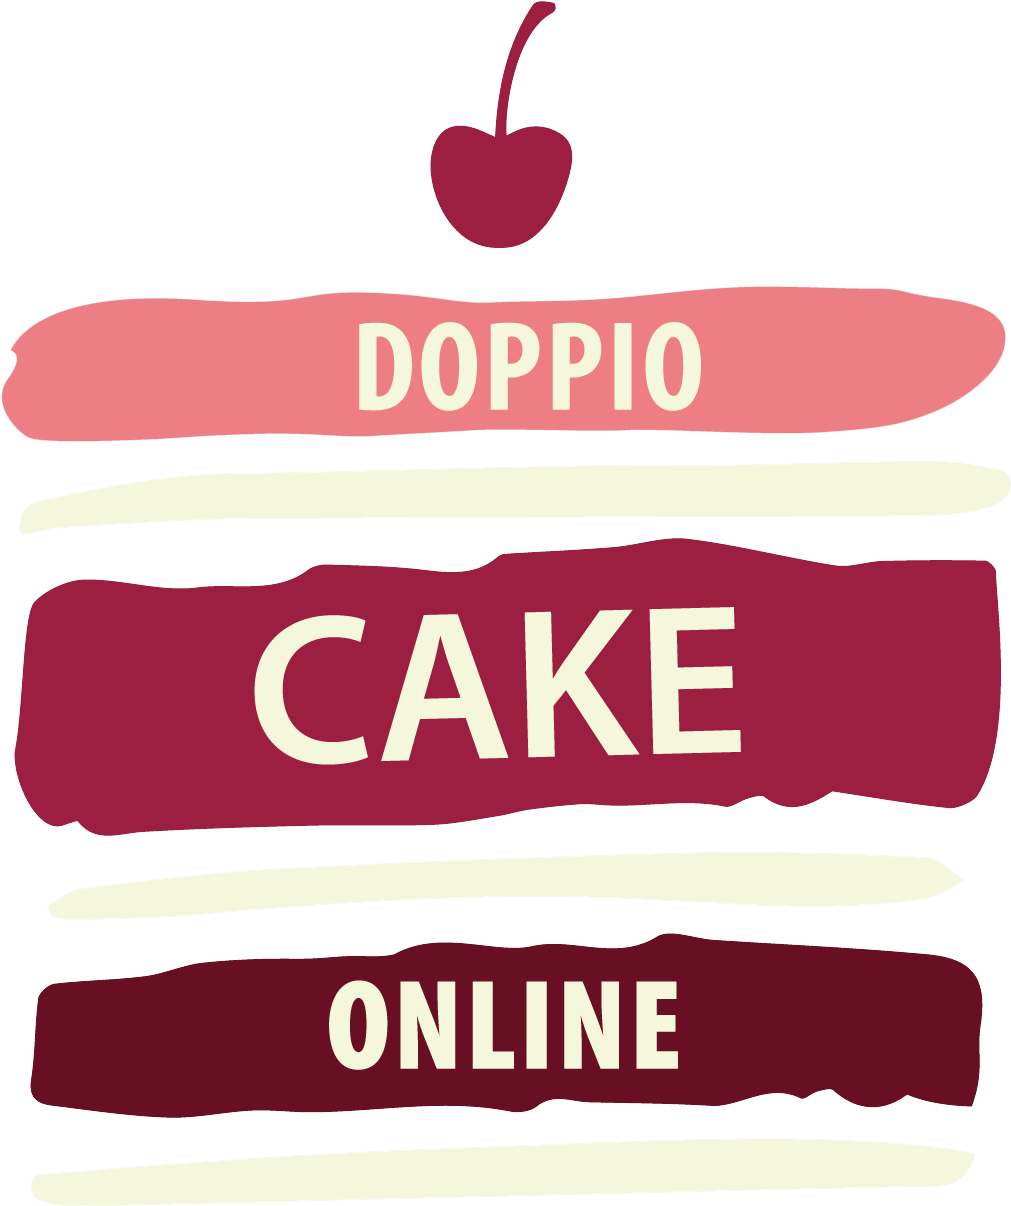 Doppio Zero Online Cakes - Cake (1121x1259)